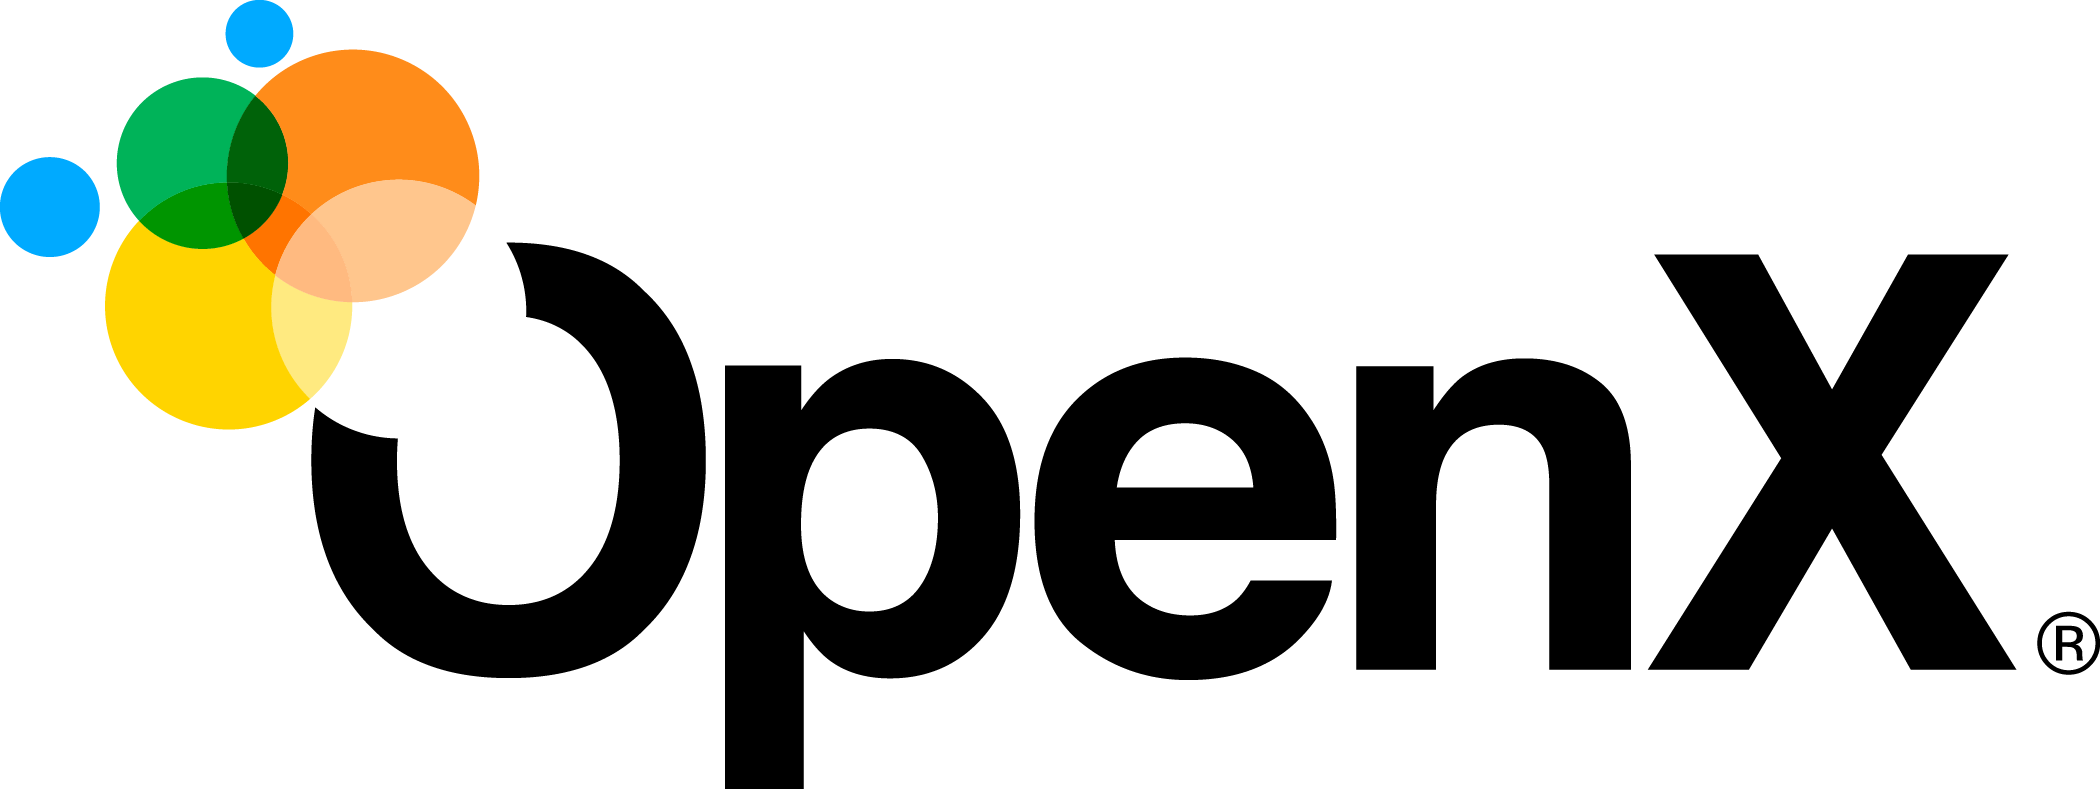 openx logotype